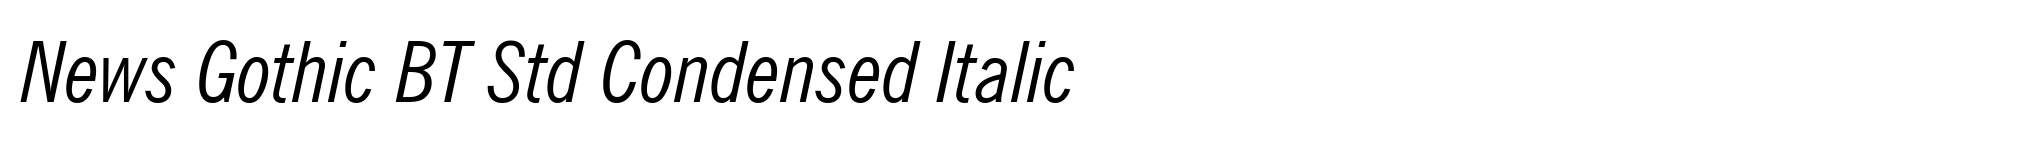 News Gothic BT Std Condensed Italic image